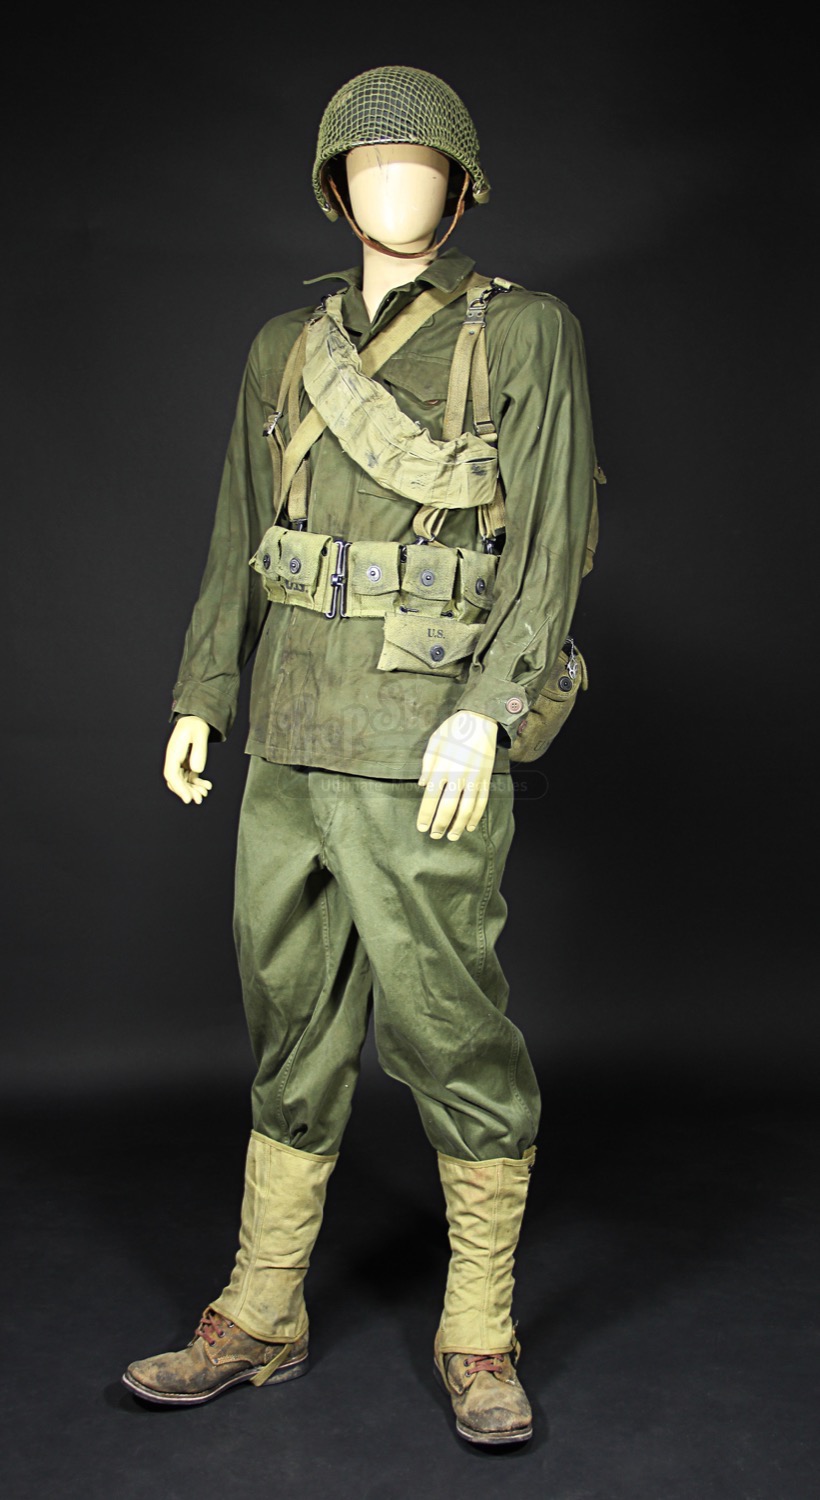 FURY (2014) - U.S. Infantryman Costume - Current price: £300